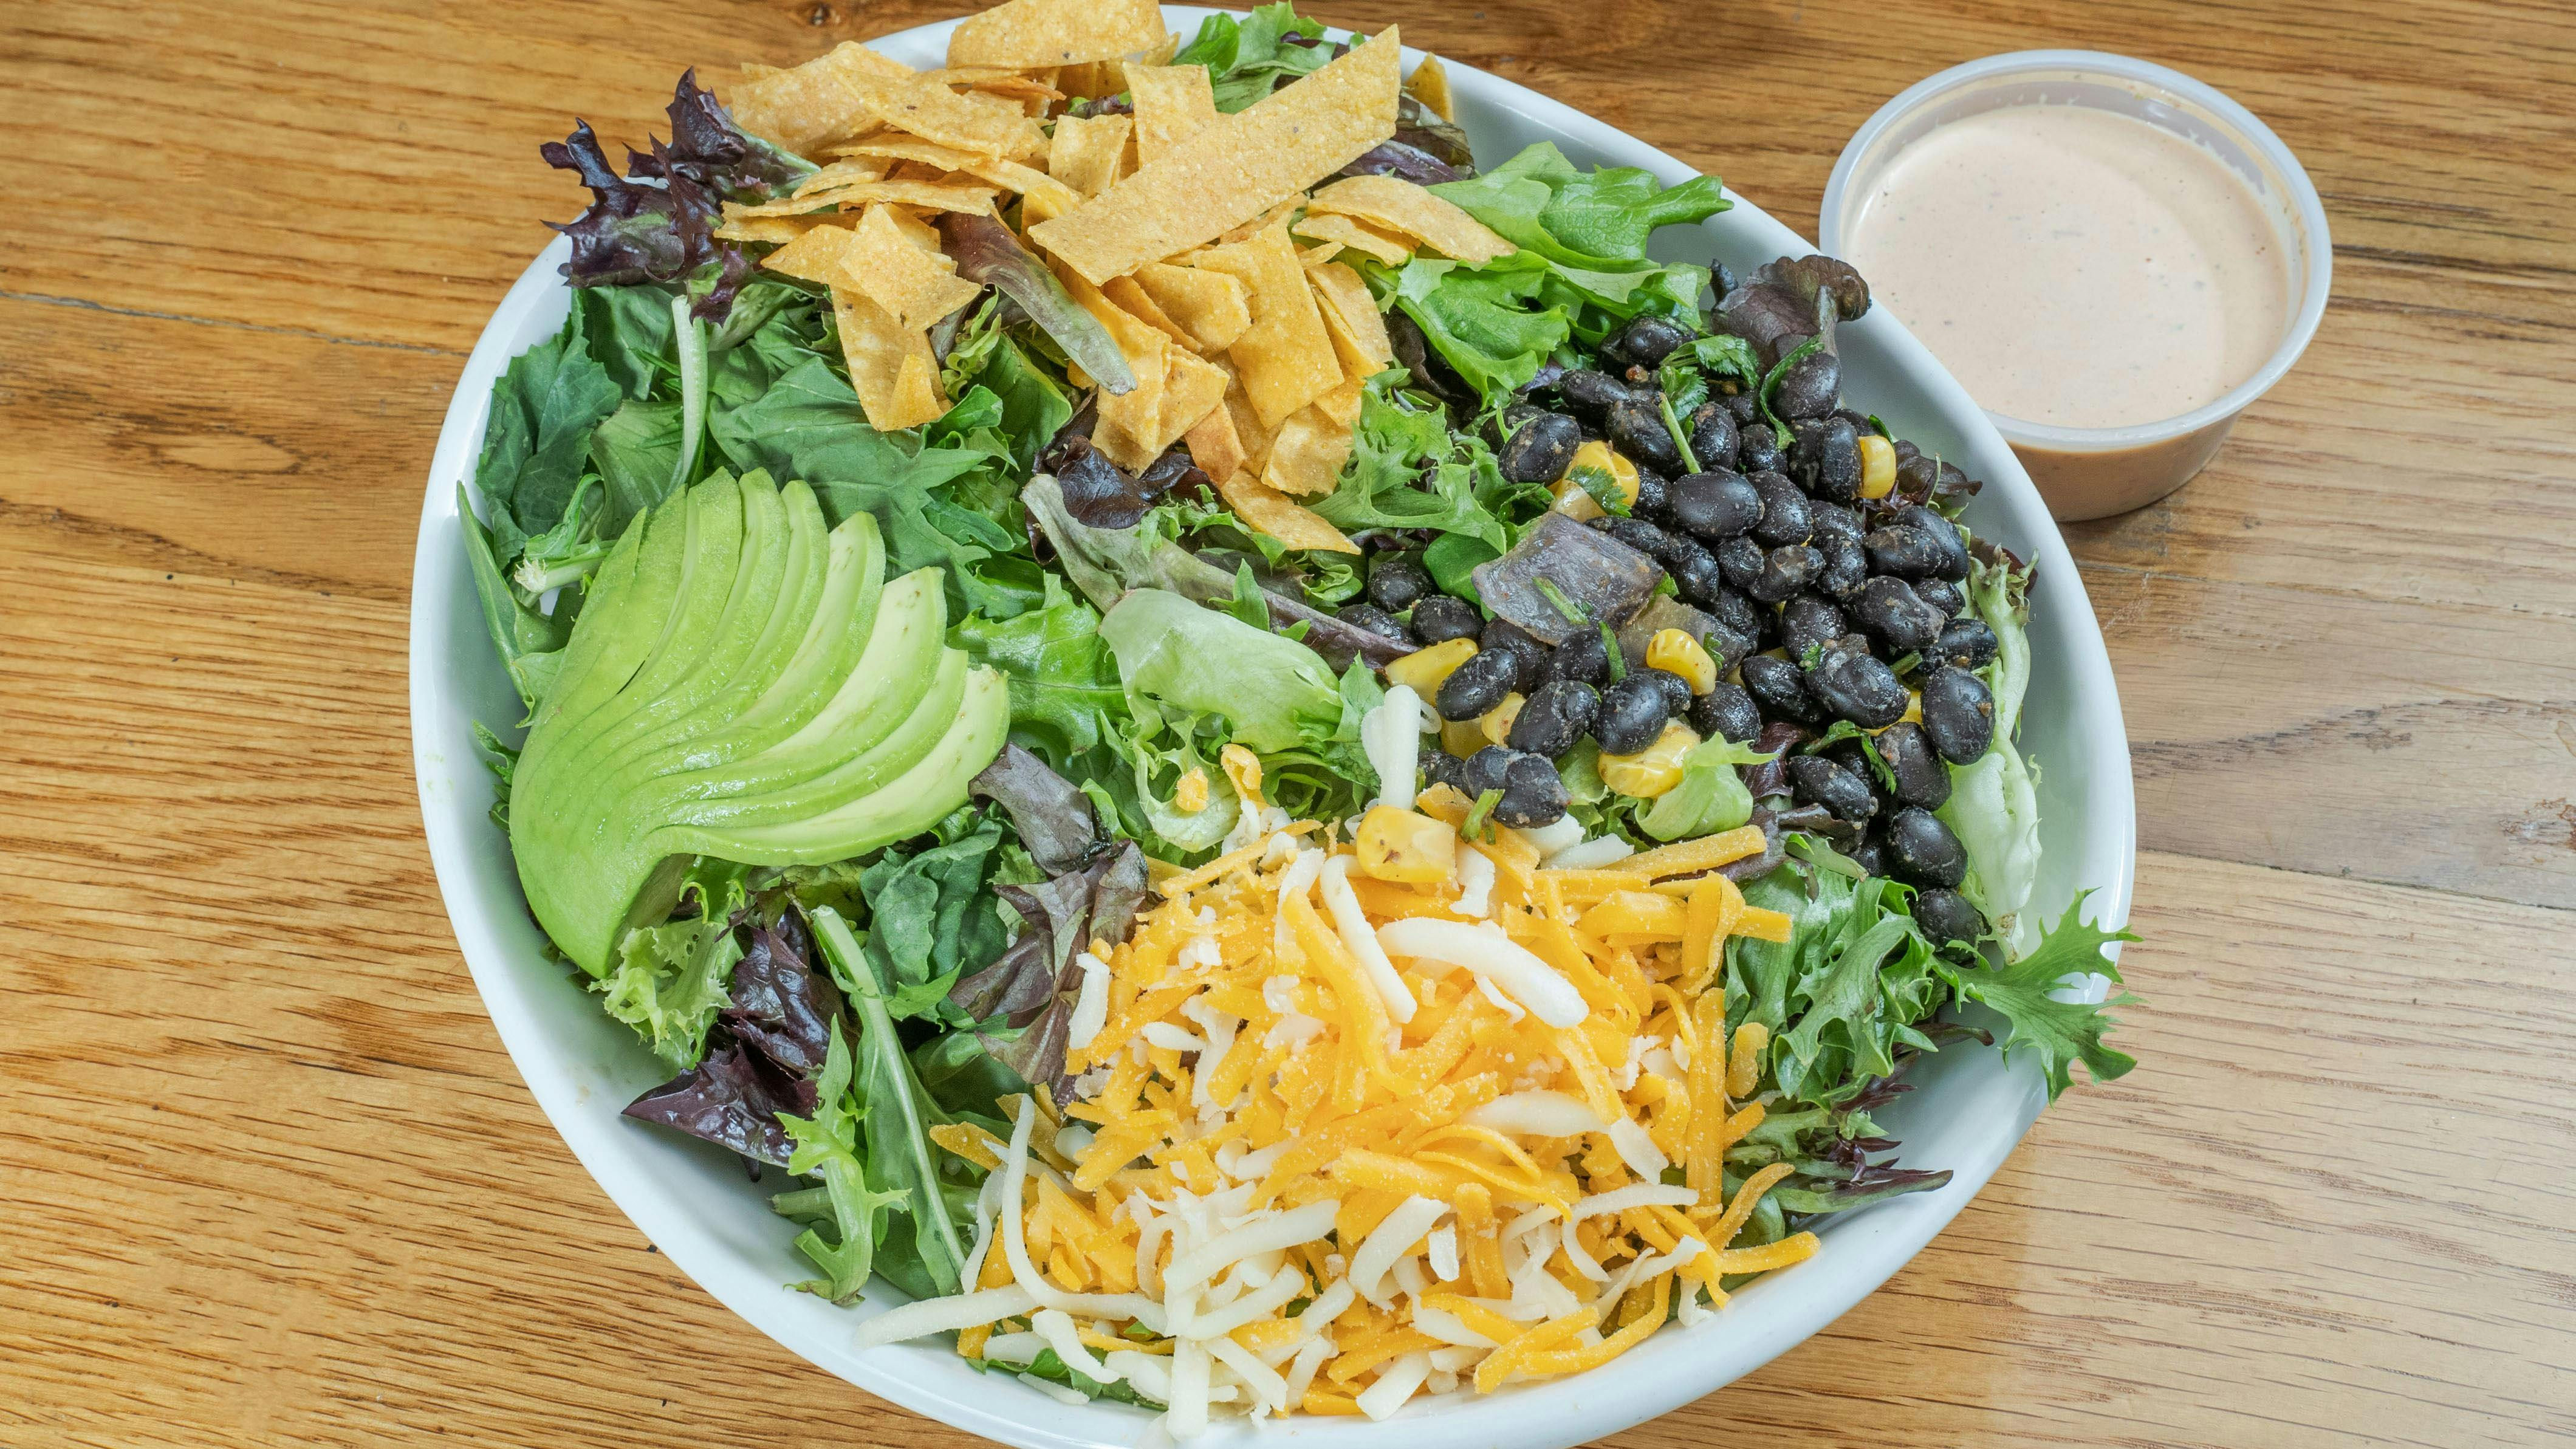 ATX Salad from Happy Chicks - Burnet Rd in Austin, TX